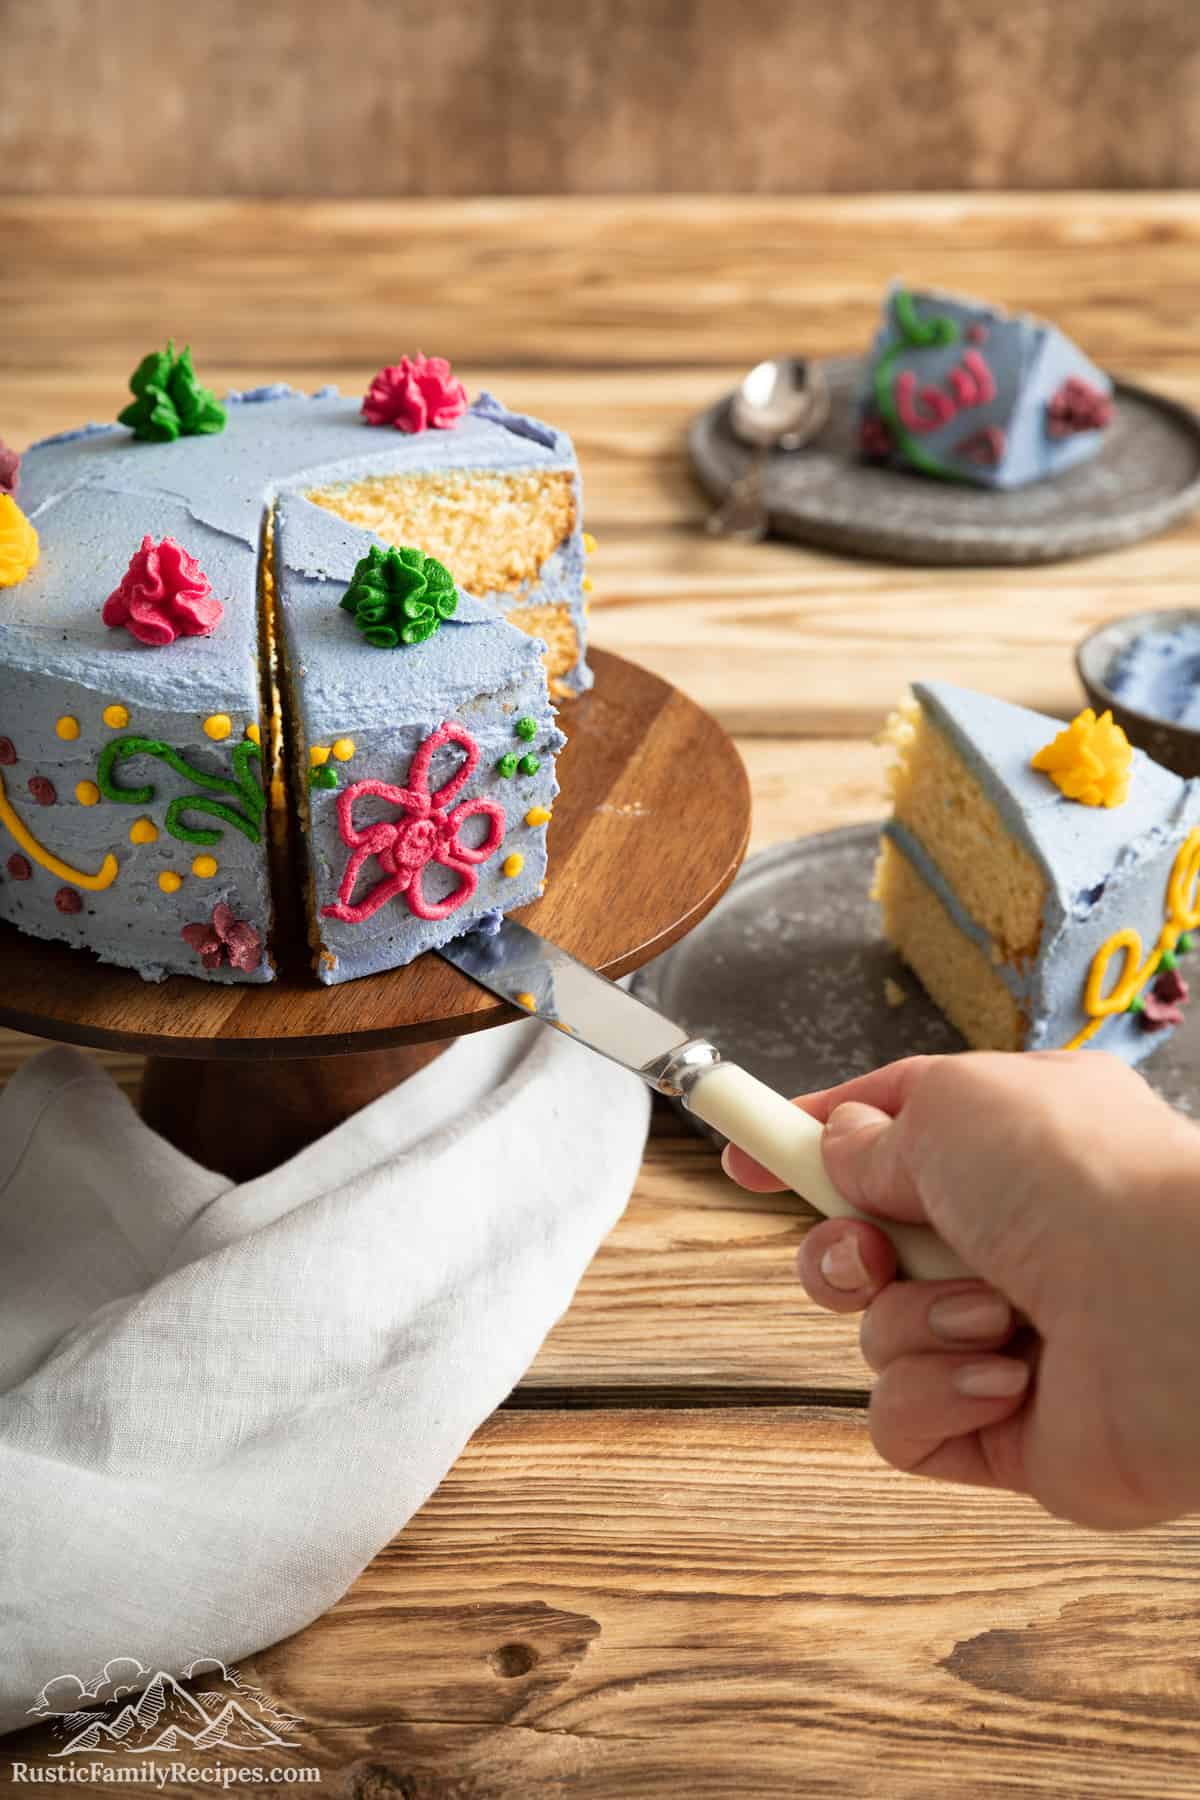 A hand uses a cake knife to lift a slice away from a whole Encanto cake on a cake stand.